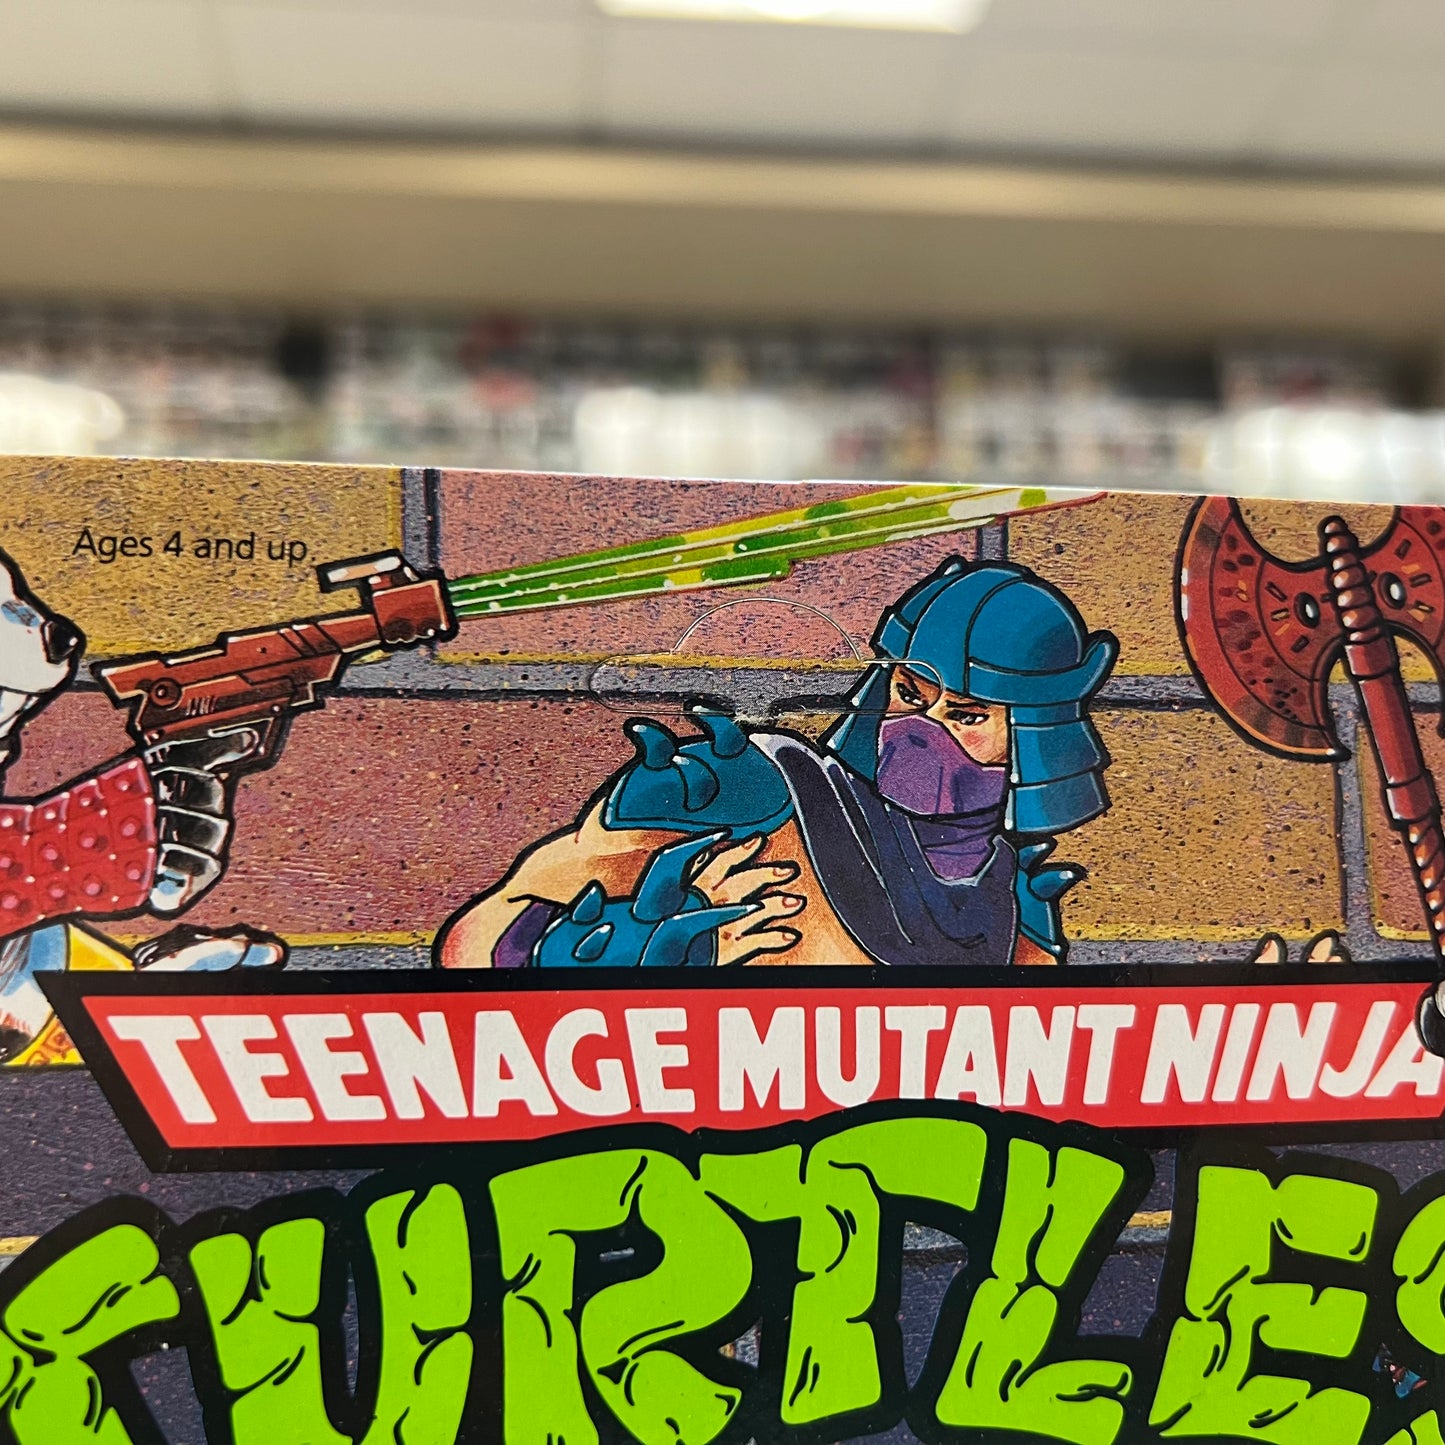 Teenage Mutant Ninja Turtles - Panda Khan - Action Figure - In box - (1990)